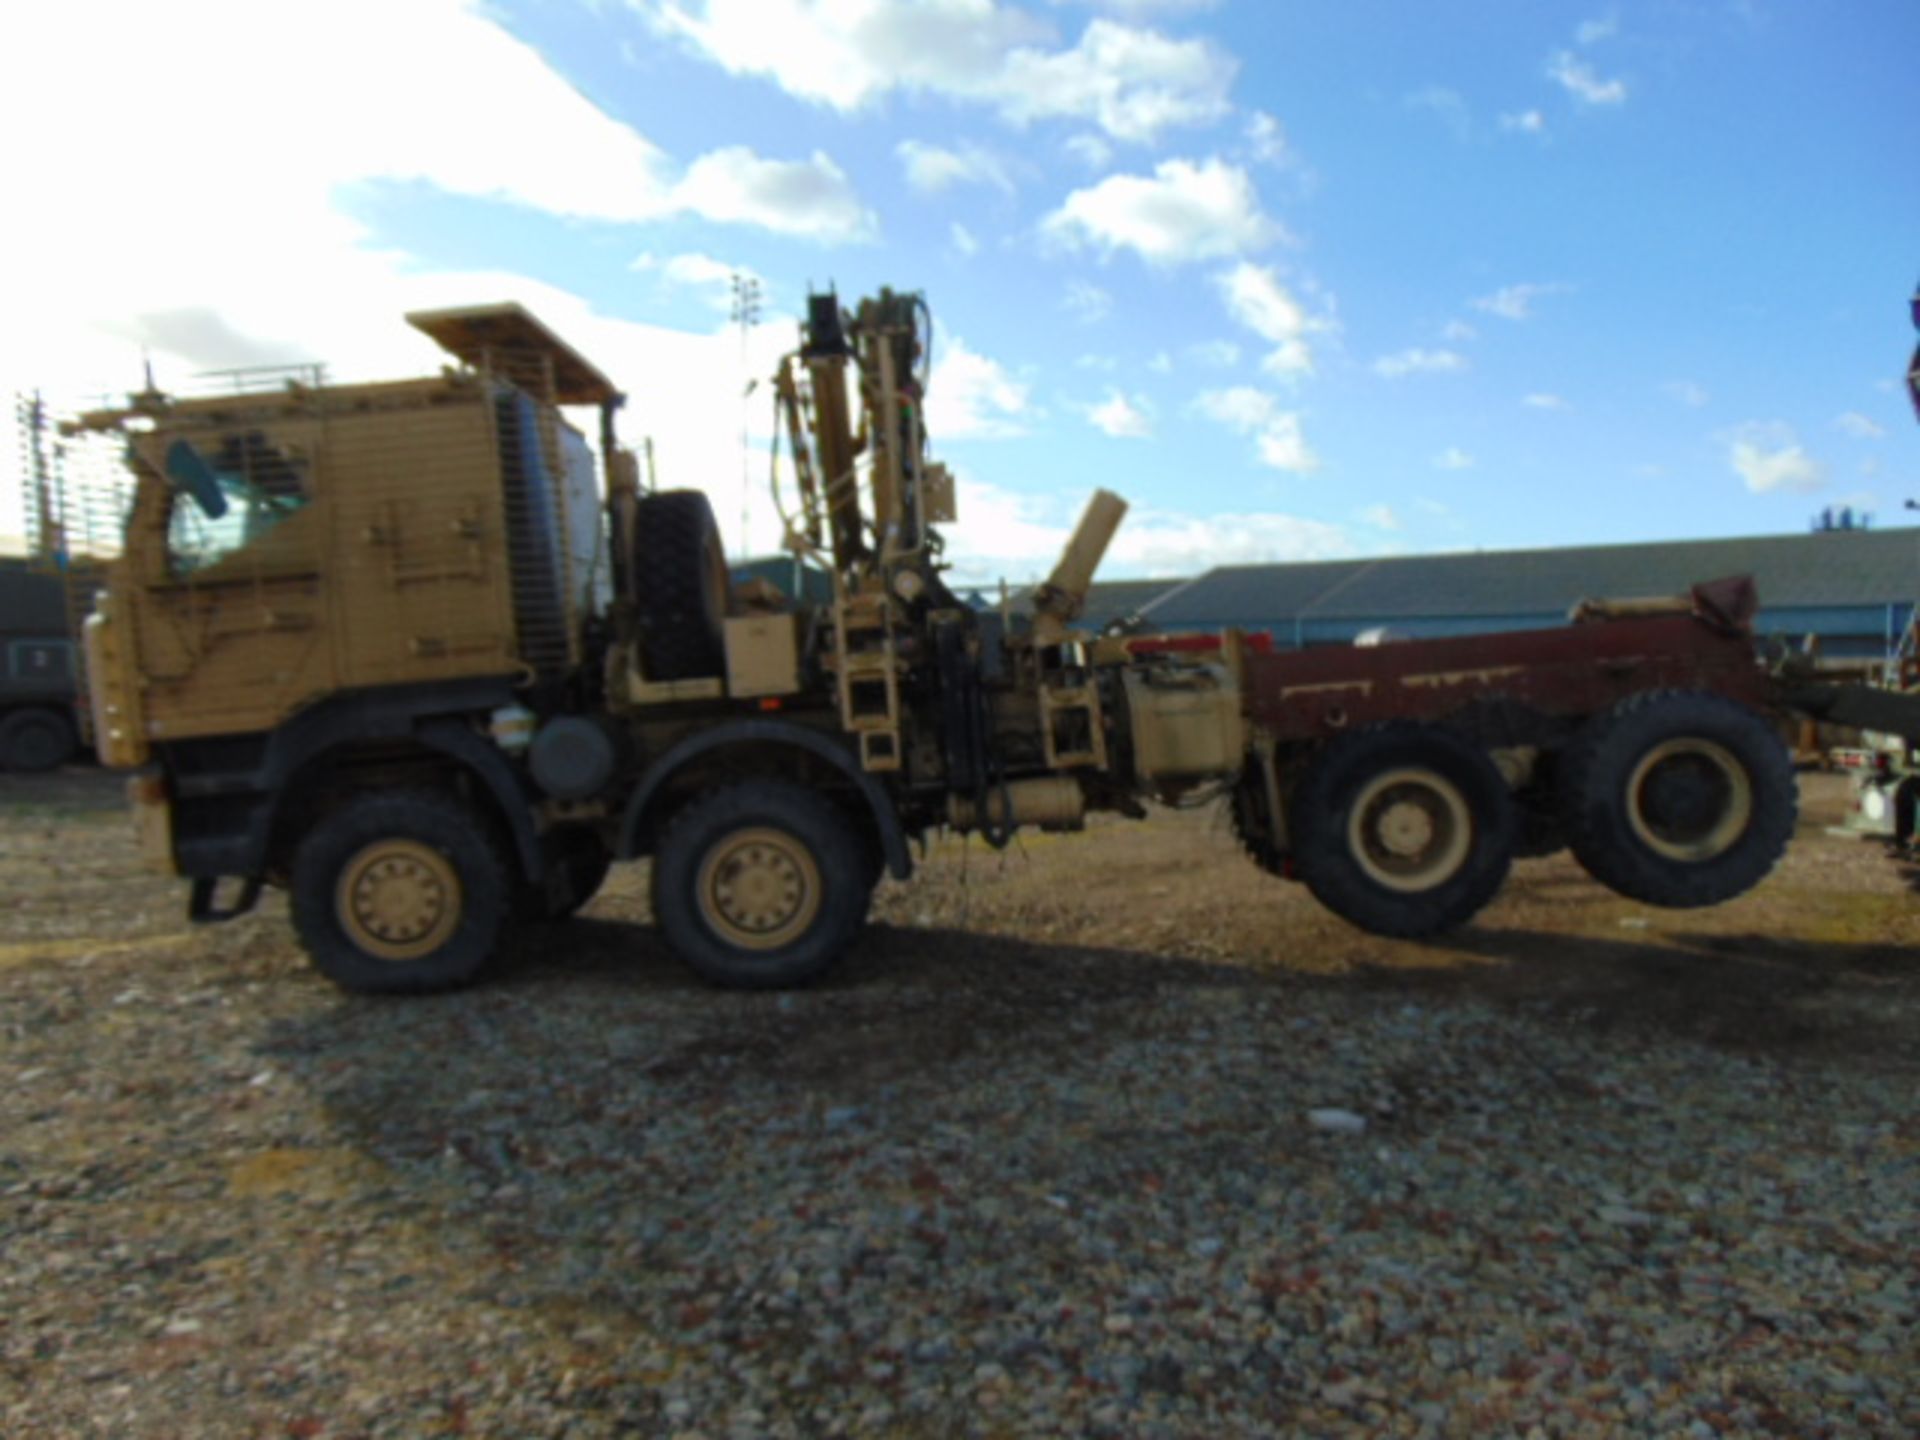 LHD Iveco Trakker 8x8 Self Loading Dump Truck - Image 4 of 19